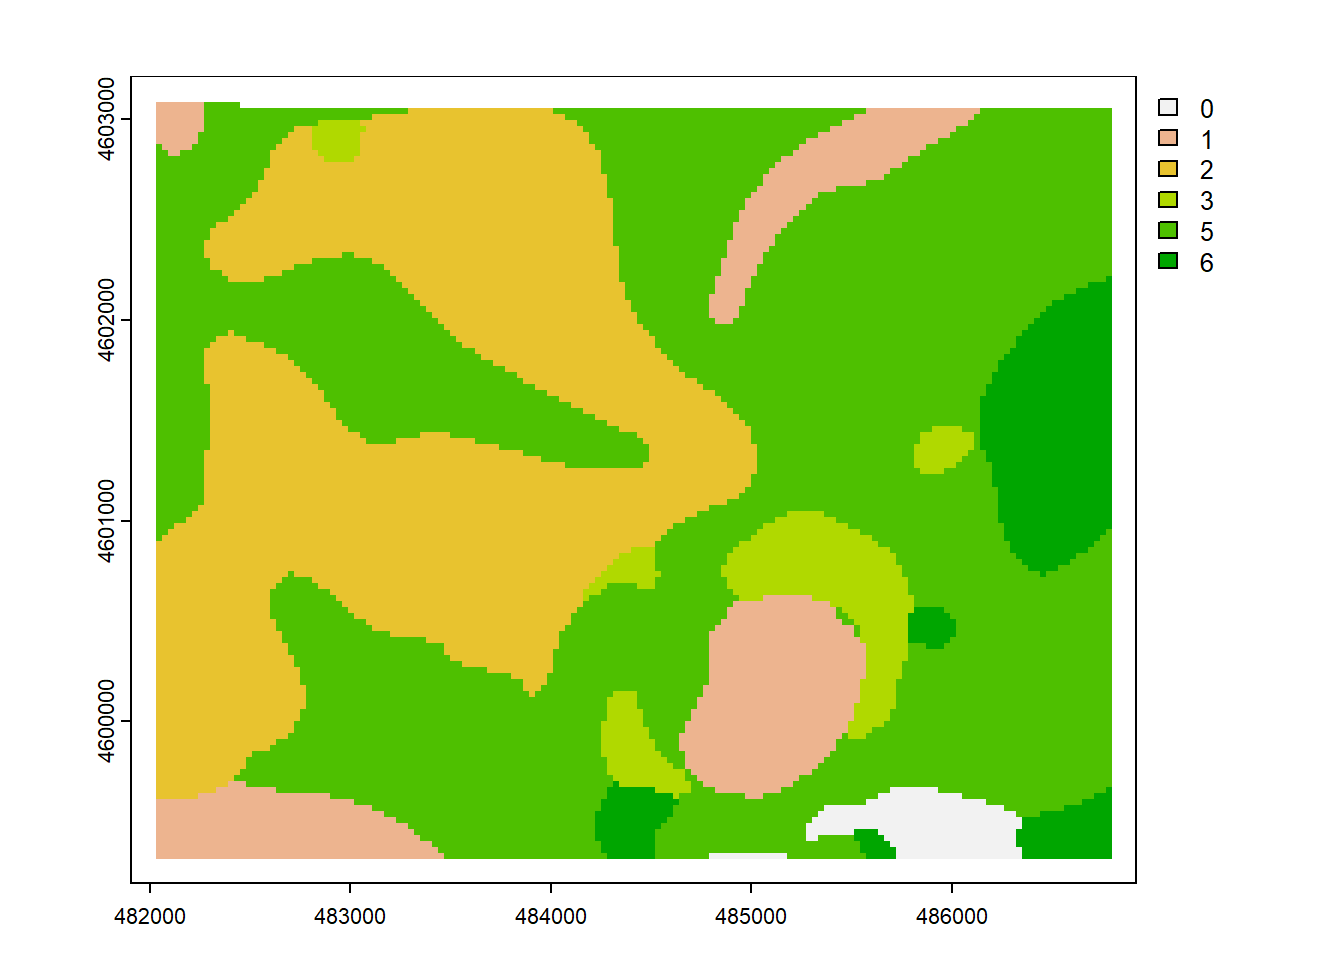 Modal geology in 9x9 neighborhoods